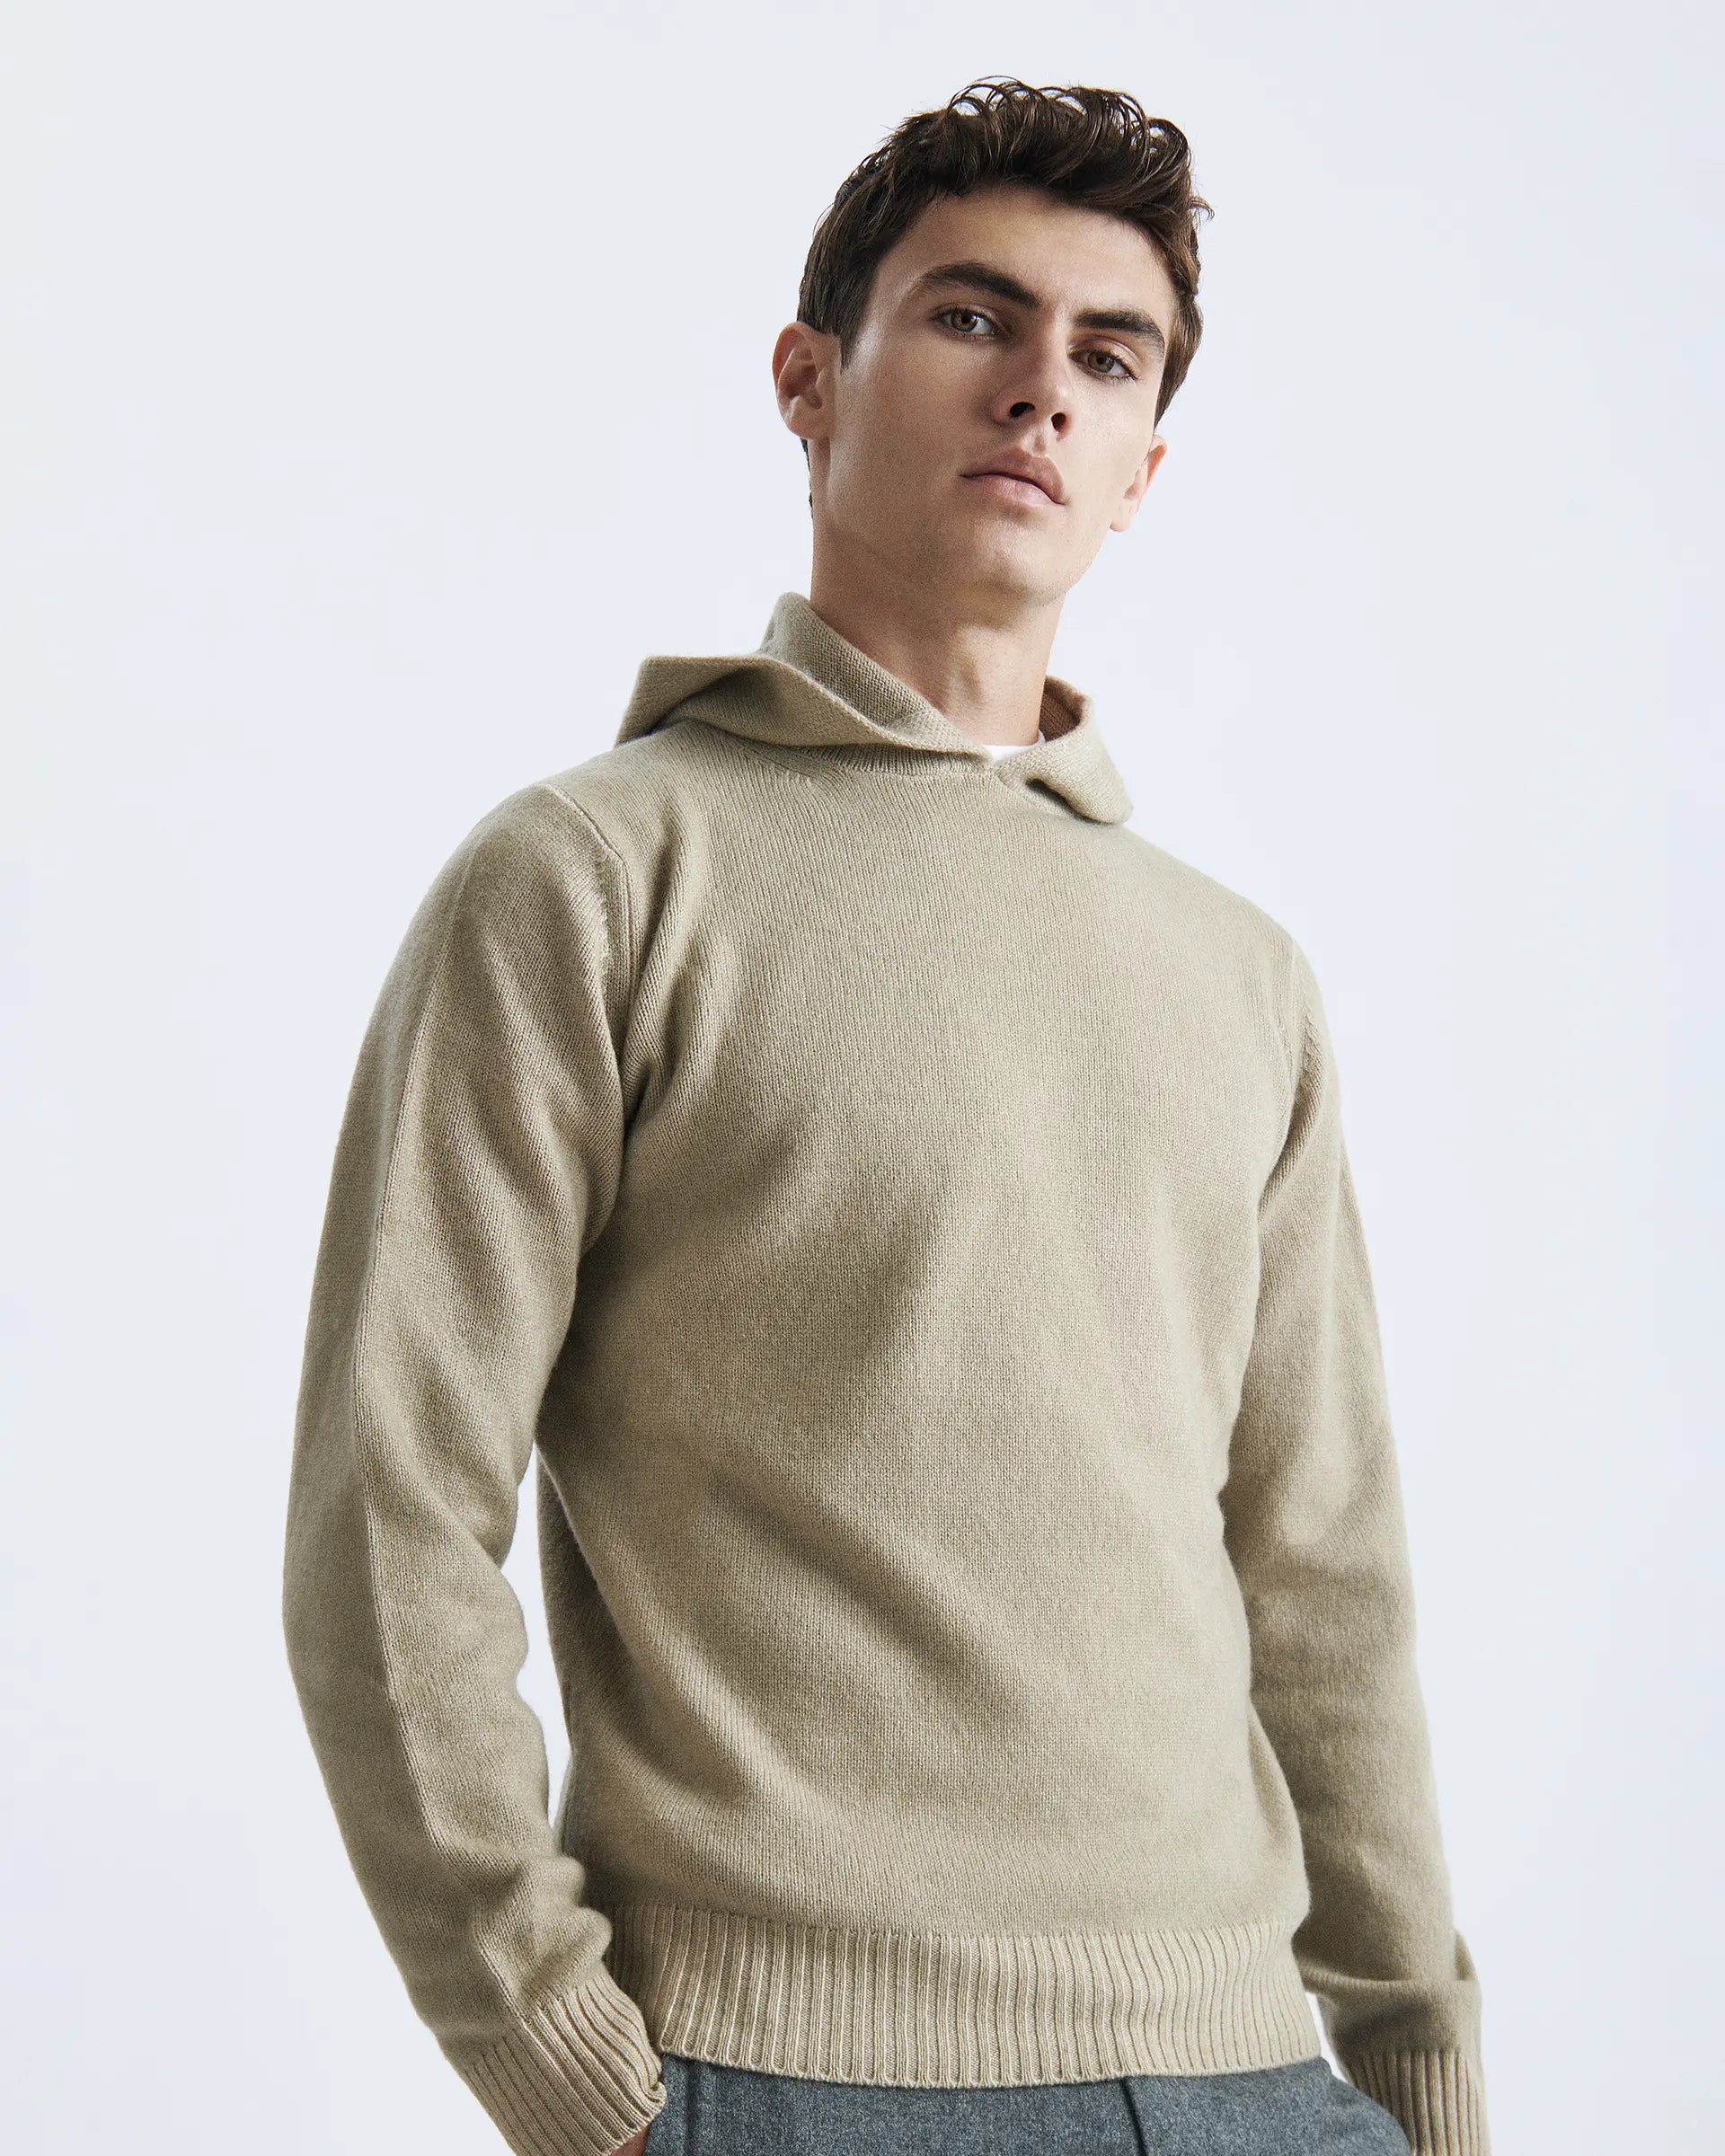 Beige wool and cashmere sweatshirt with hood, gauge 7